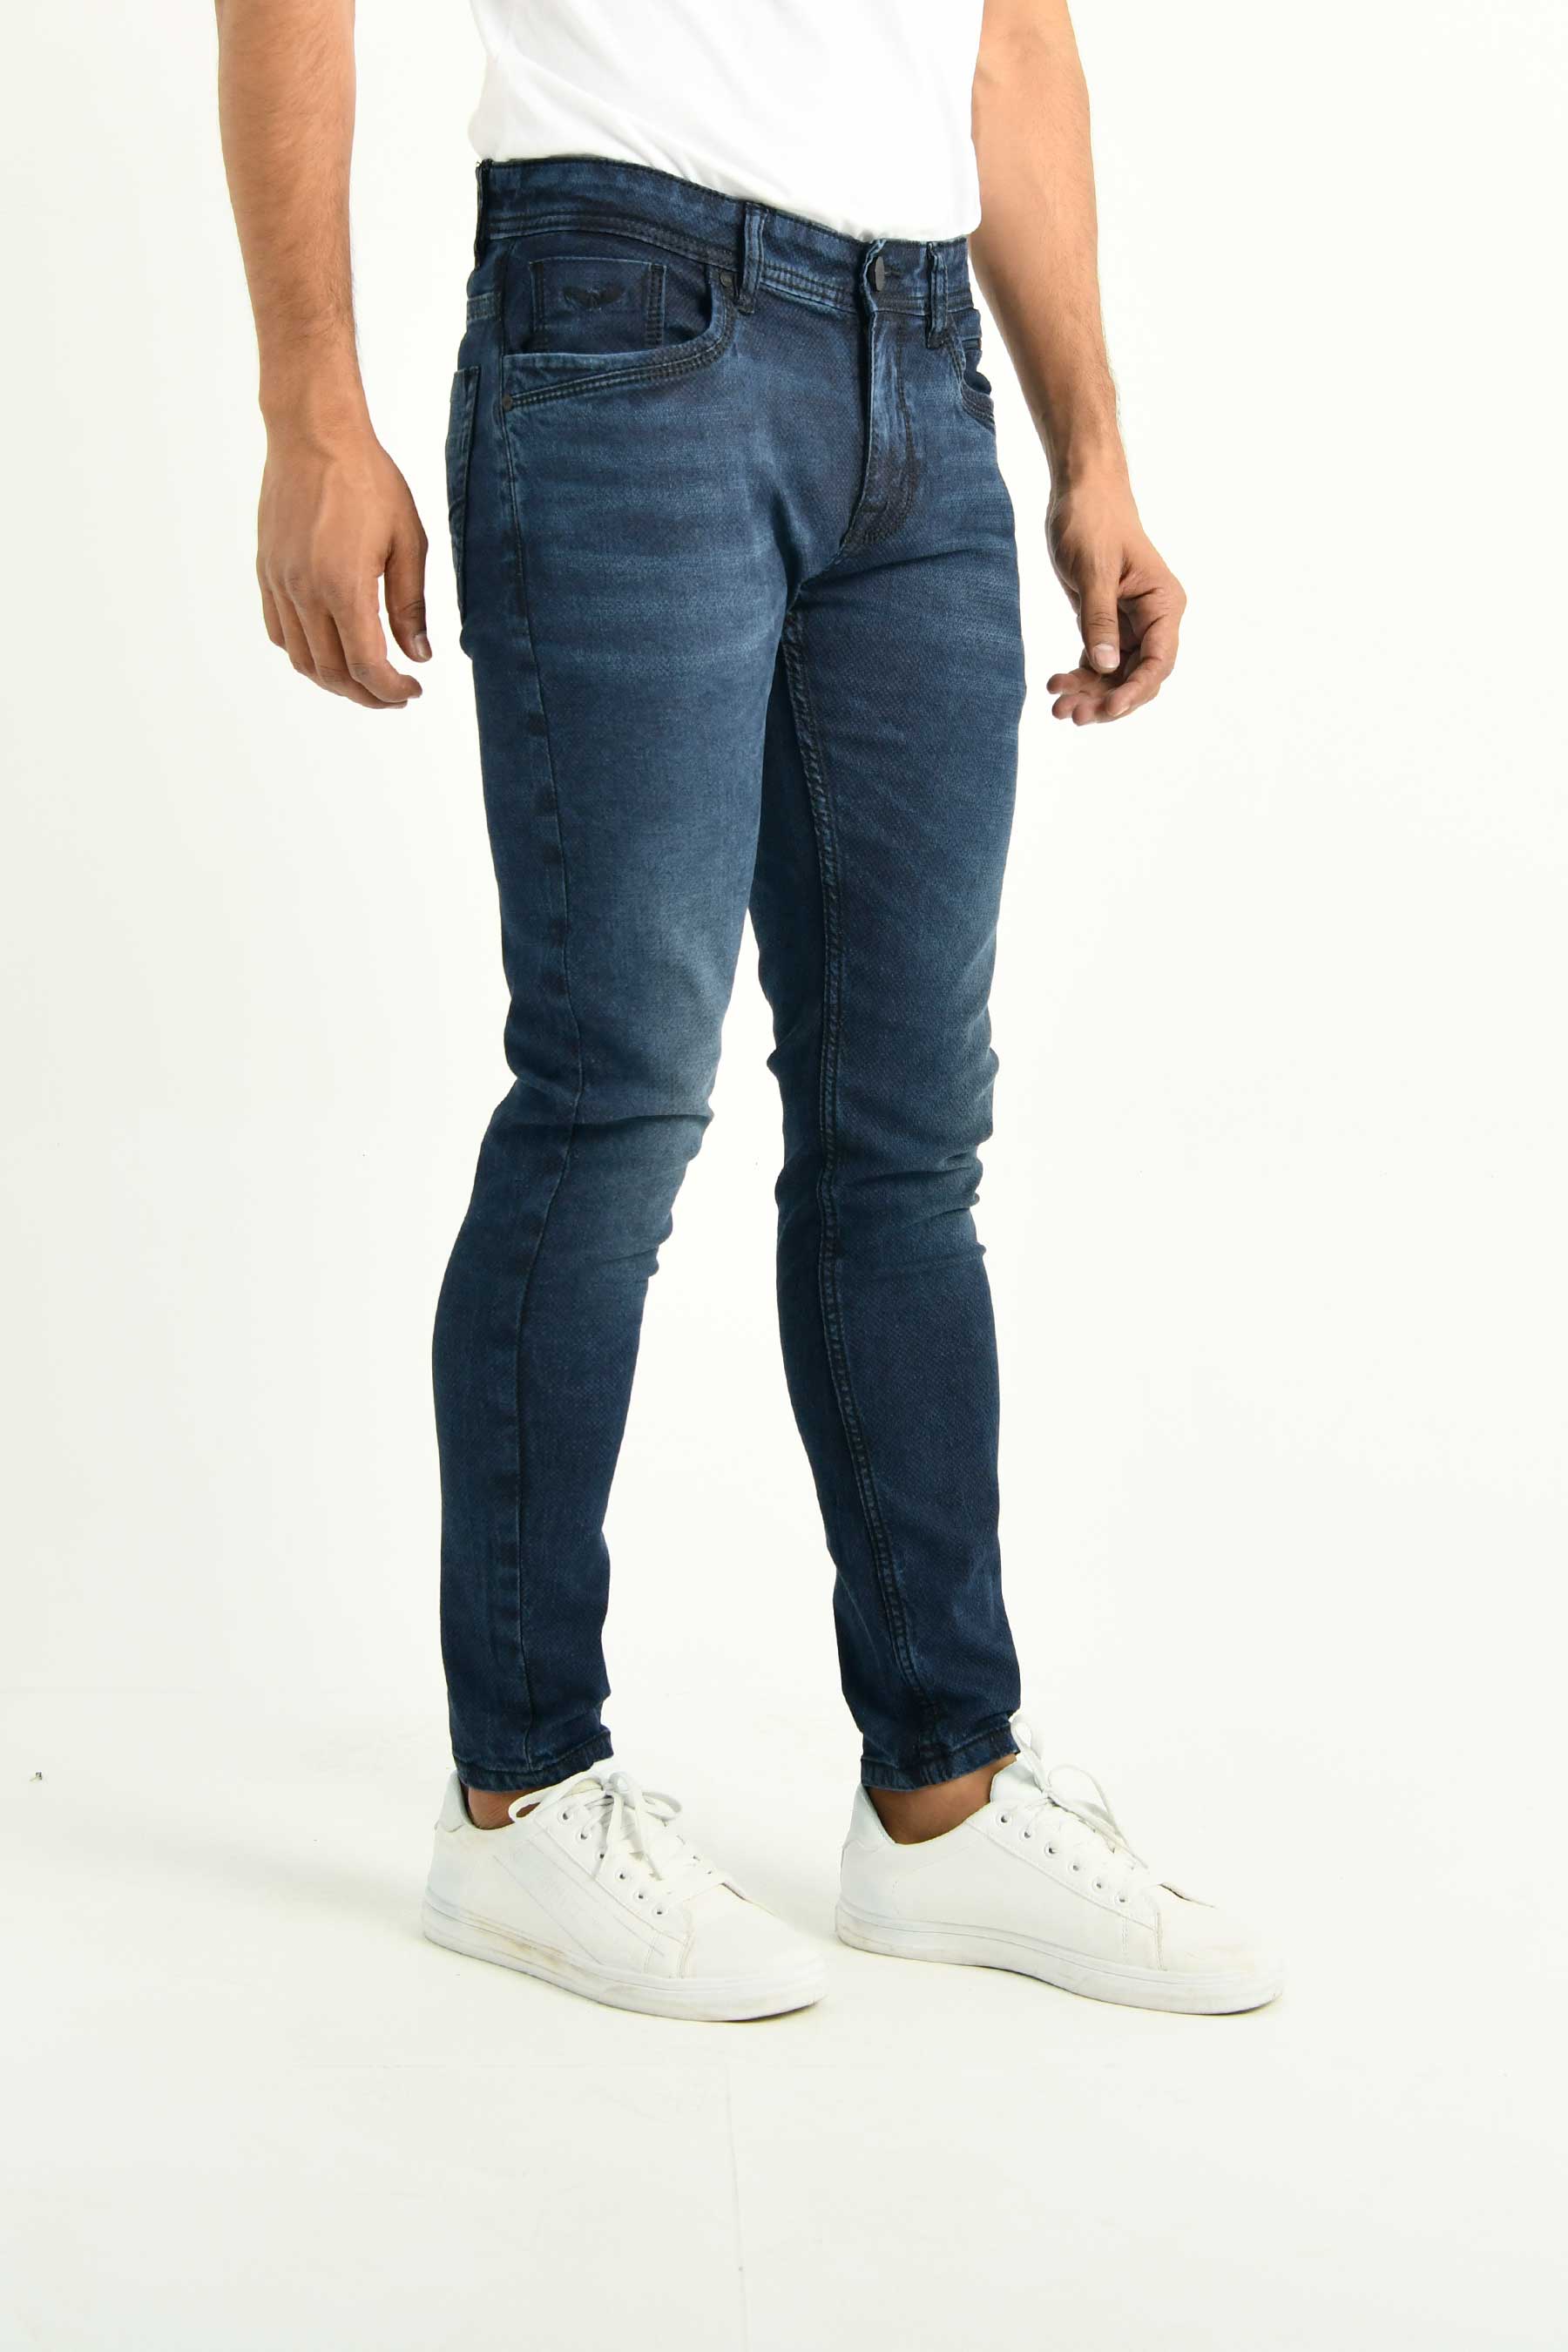 Men’s Denim jeans- RJ3889